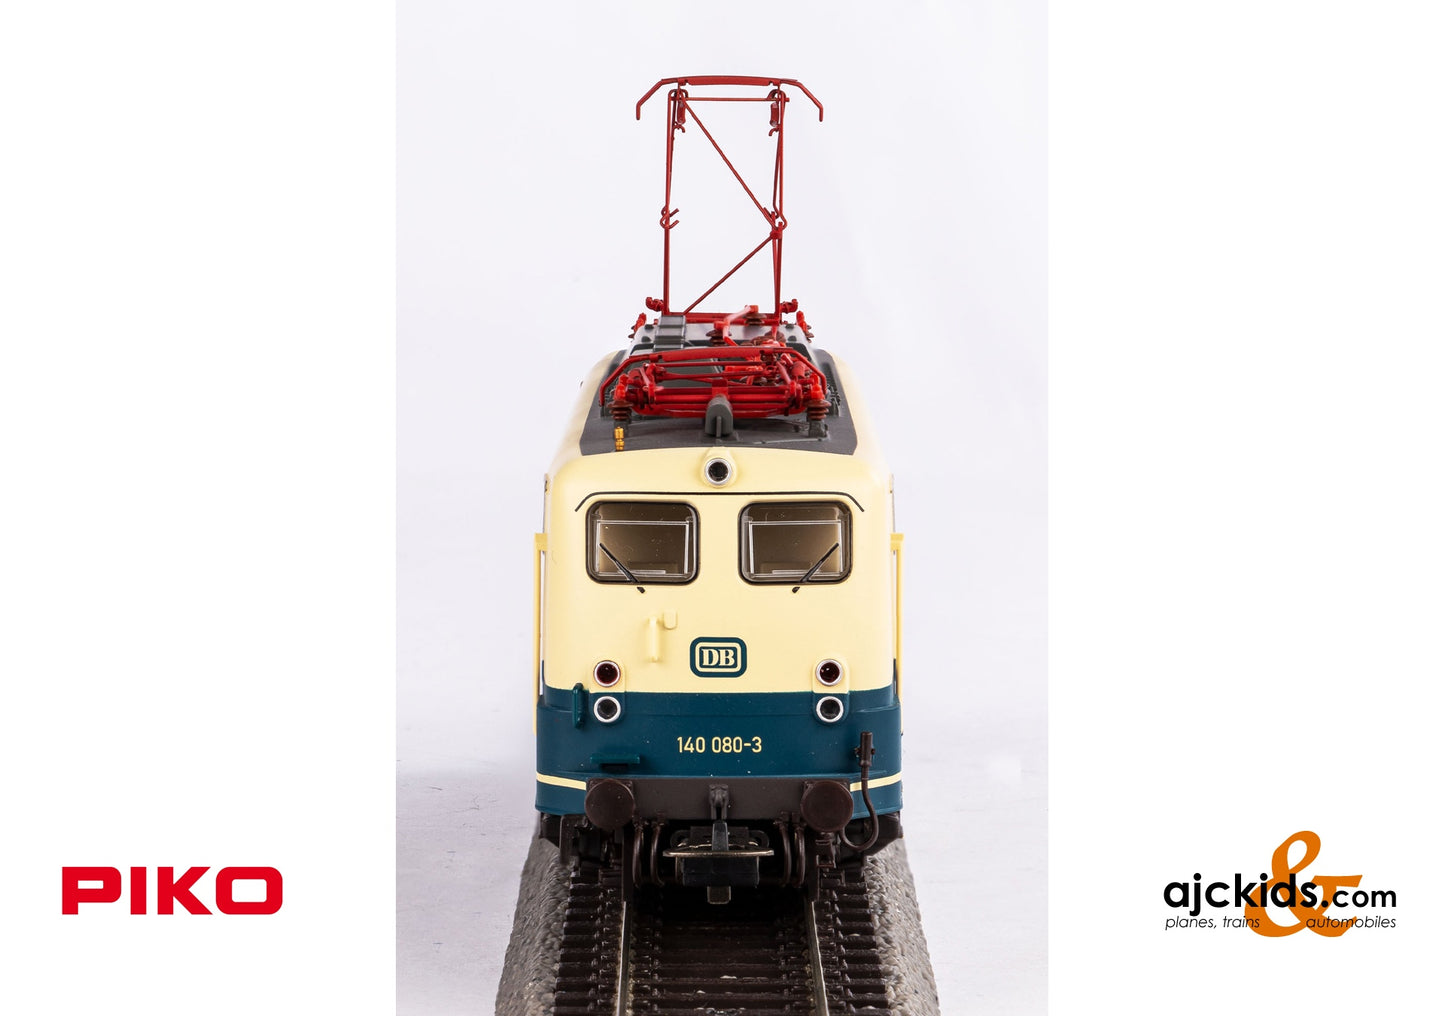 Piko 51911 - BR 140 Electric Locomotive DB beige/blue IV Sound